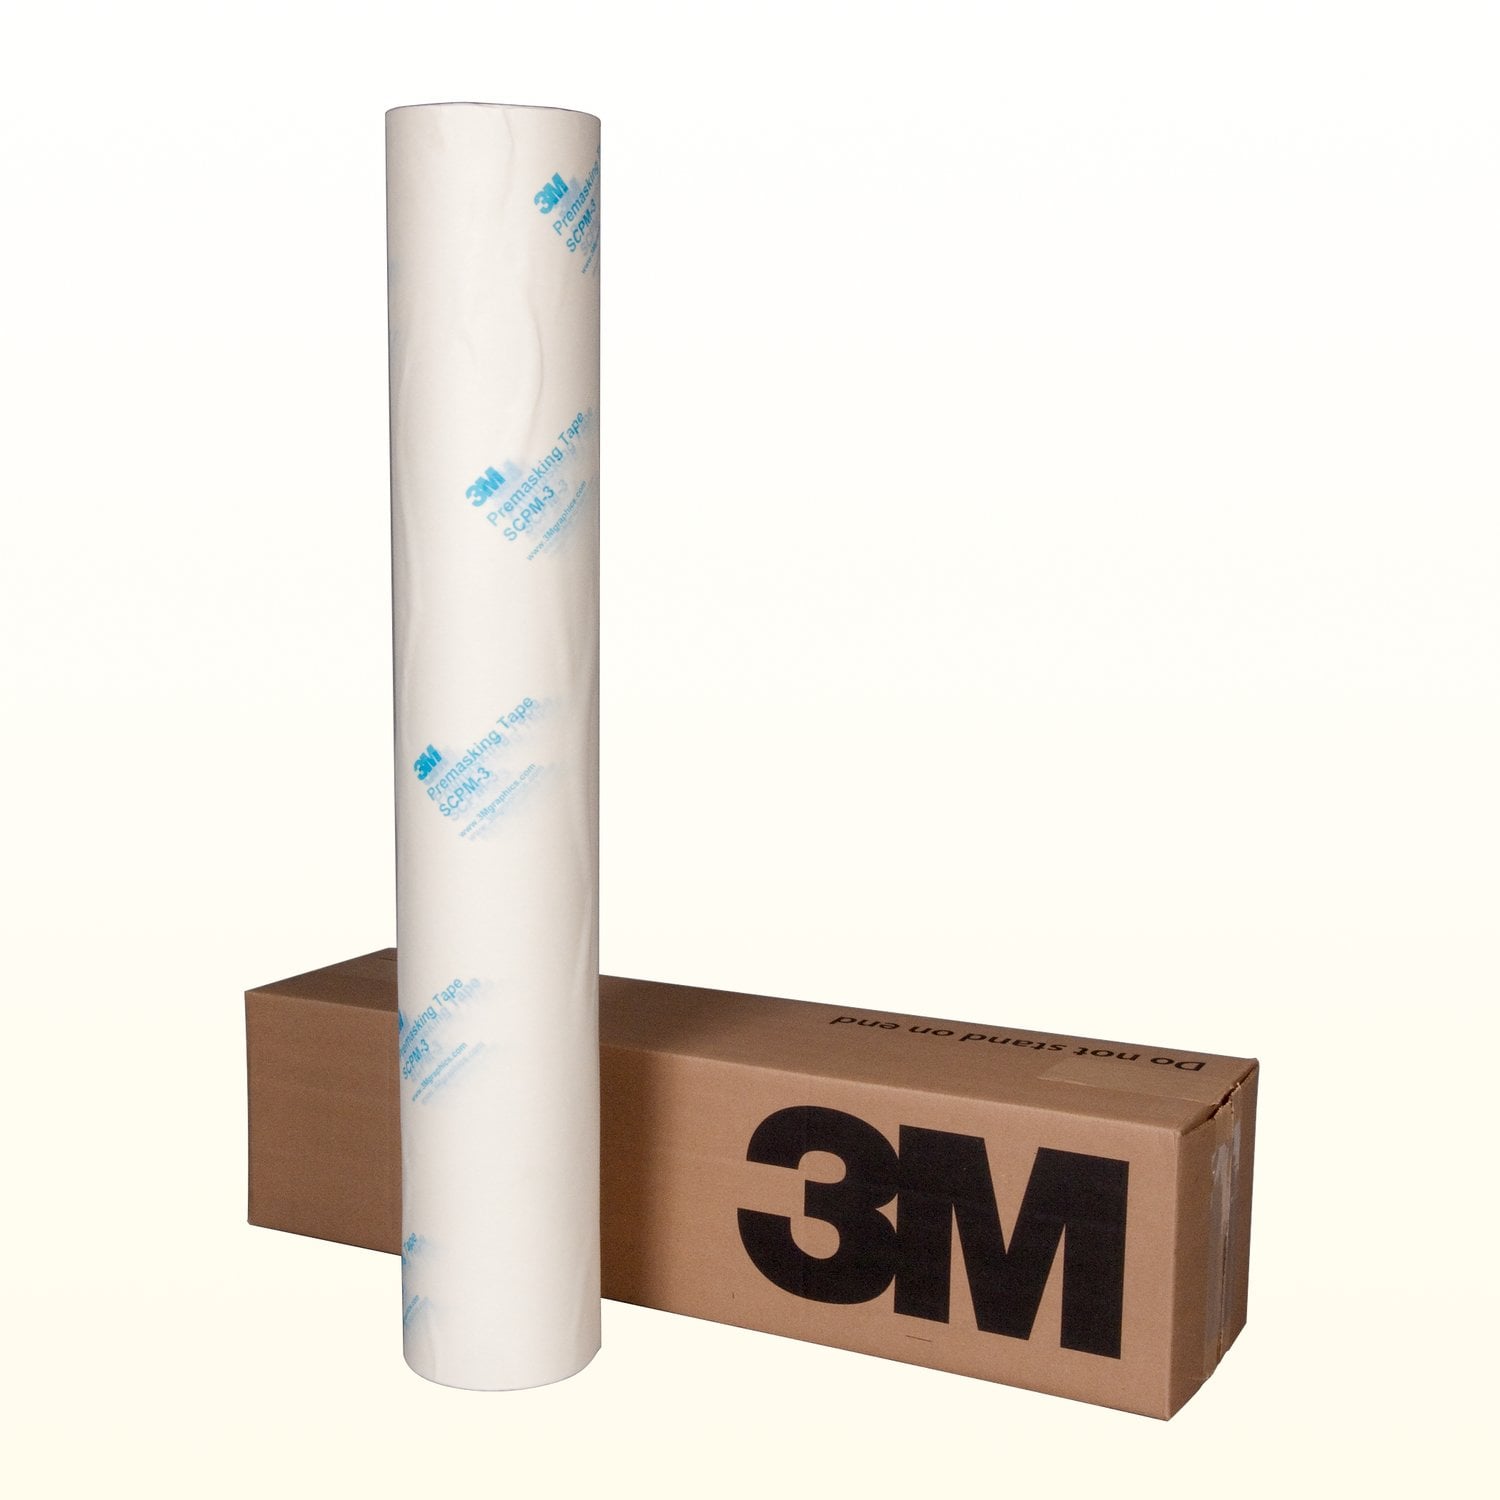 7000129937 - 3M Premasking Tape SCPM-3, 36 in x 100 yd, 1 Roll/Case